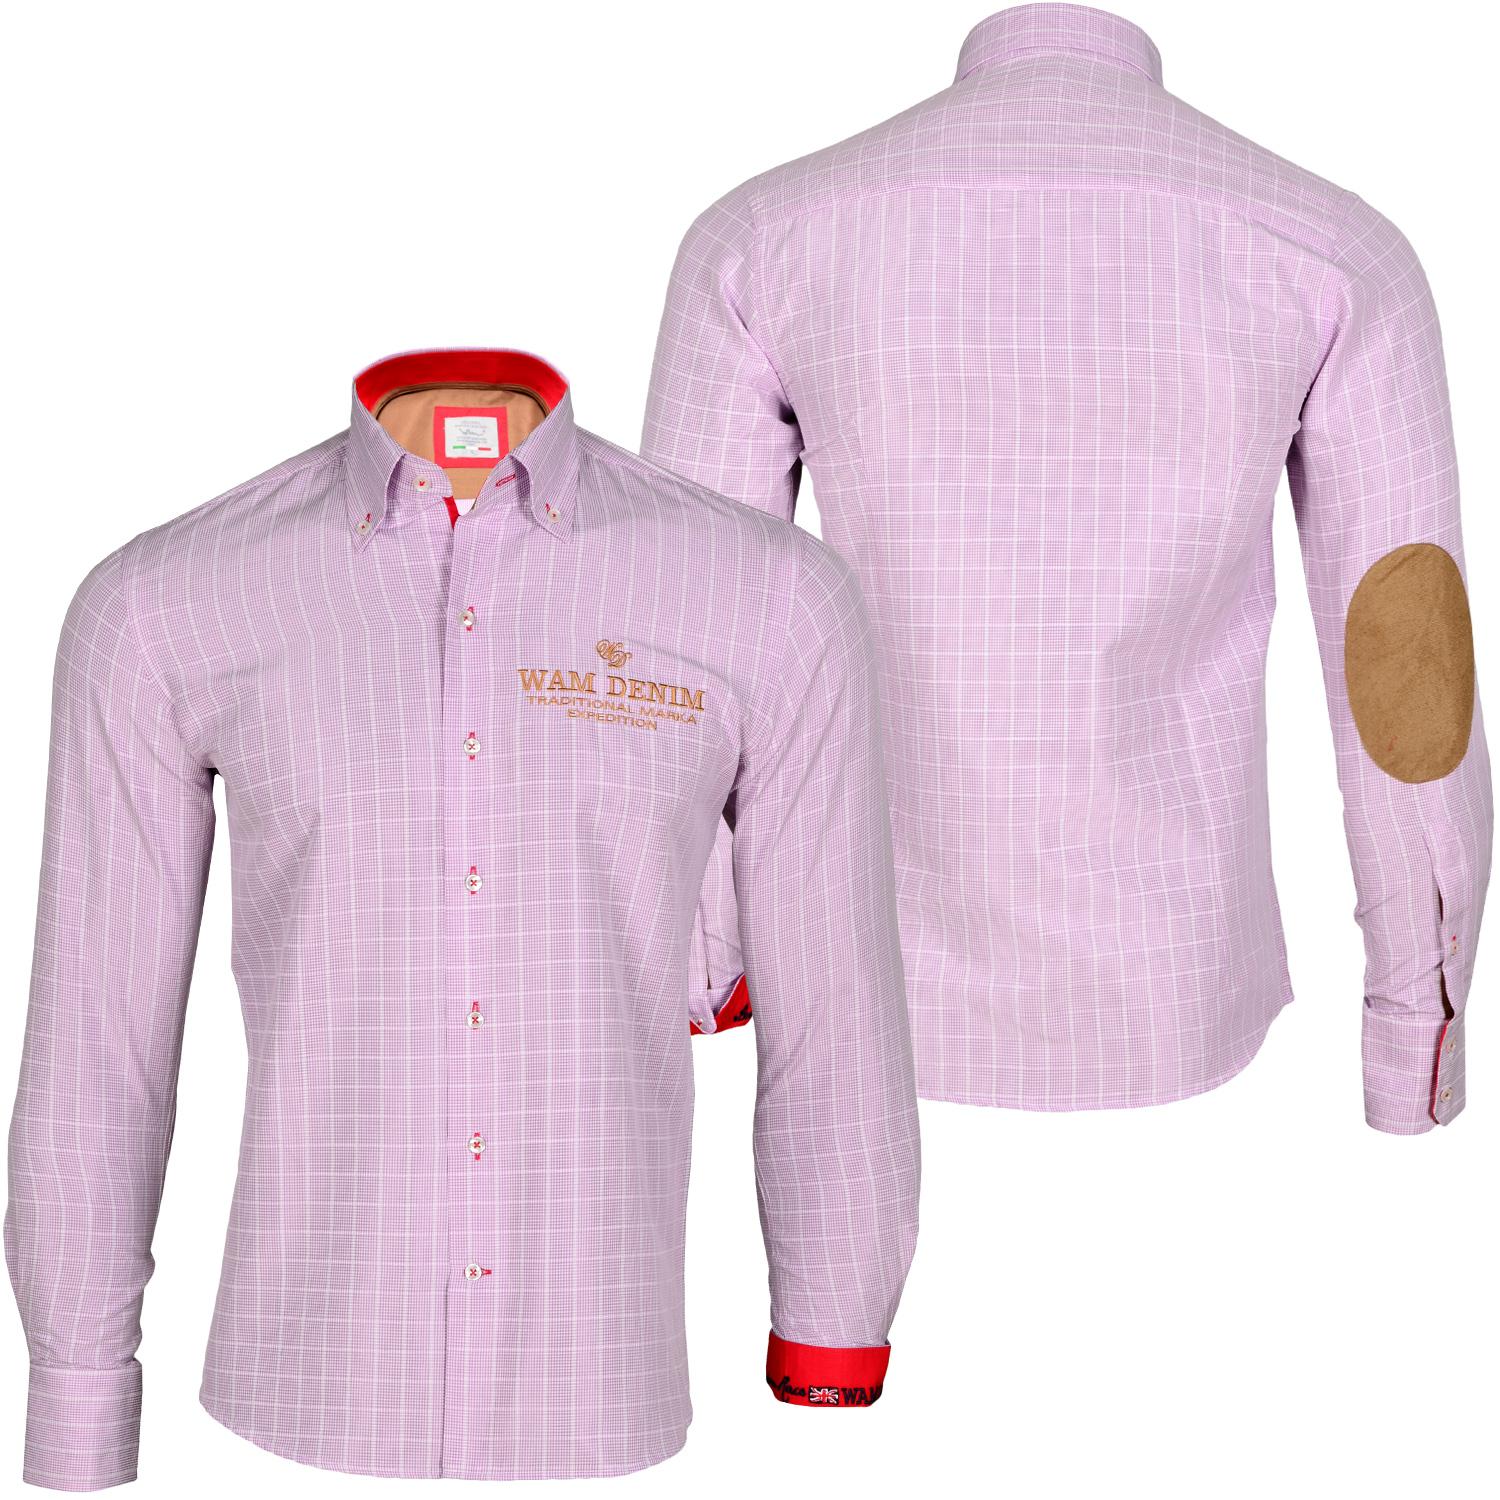 Foto Wam Denim Traditional Marka Expedition Camisas Rosa